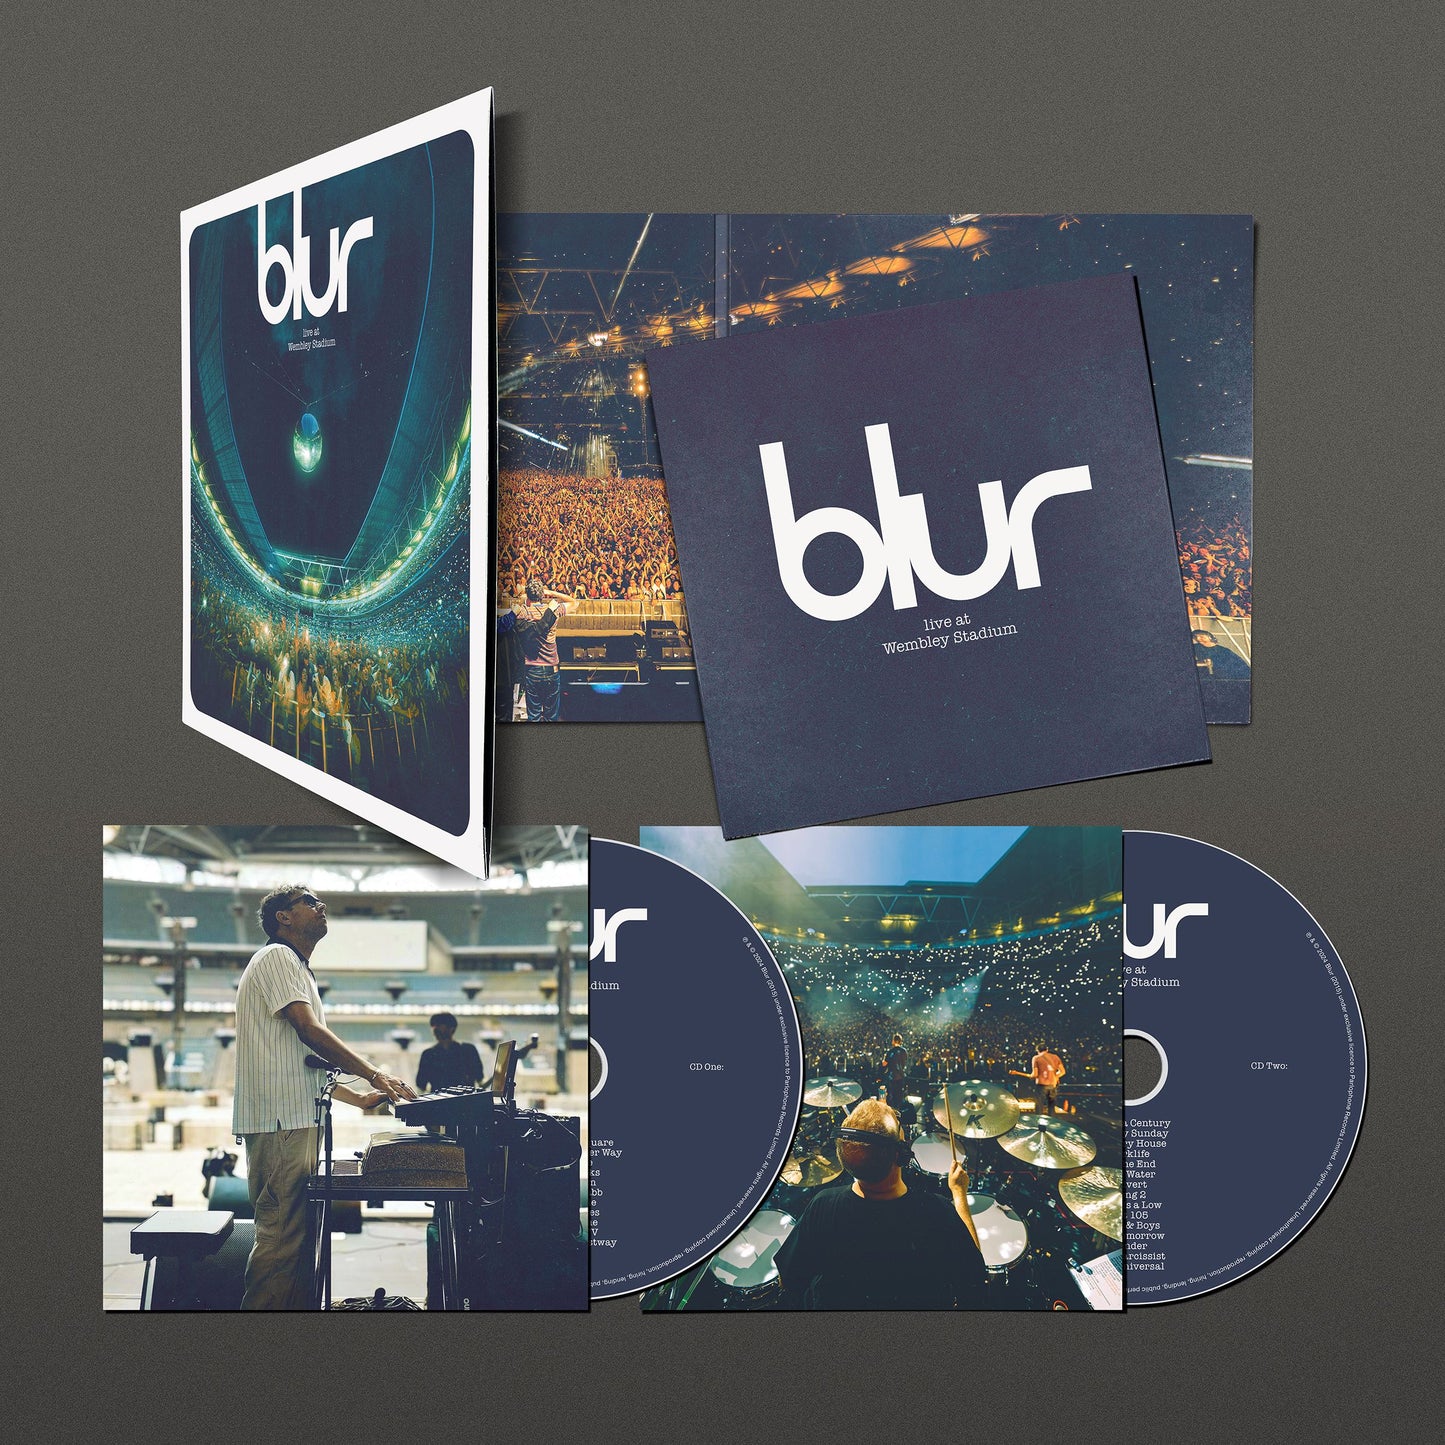 Blur - Live at Wembley Stadium (Preorder 26/07/24)